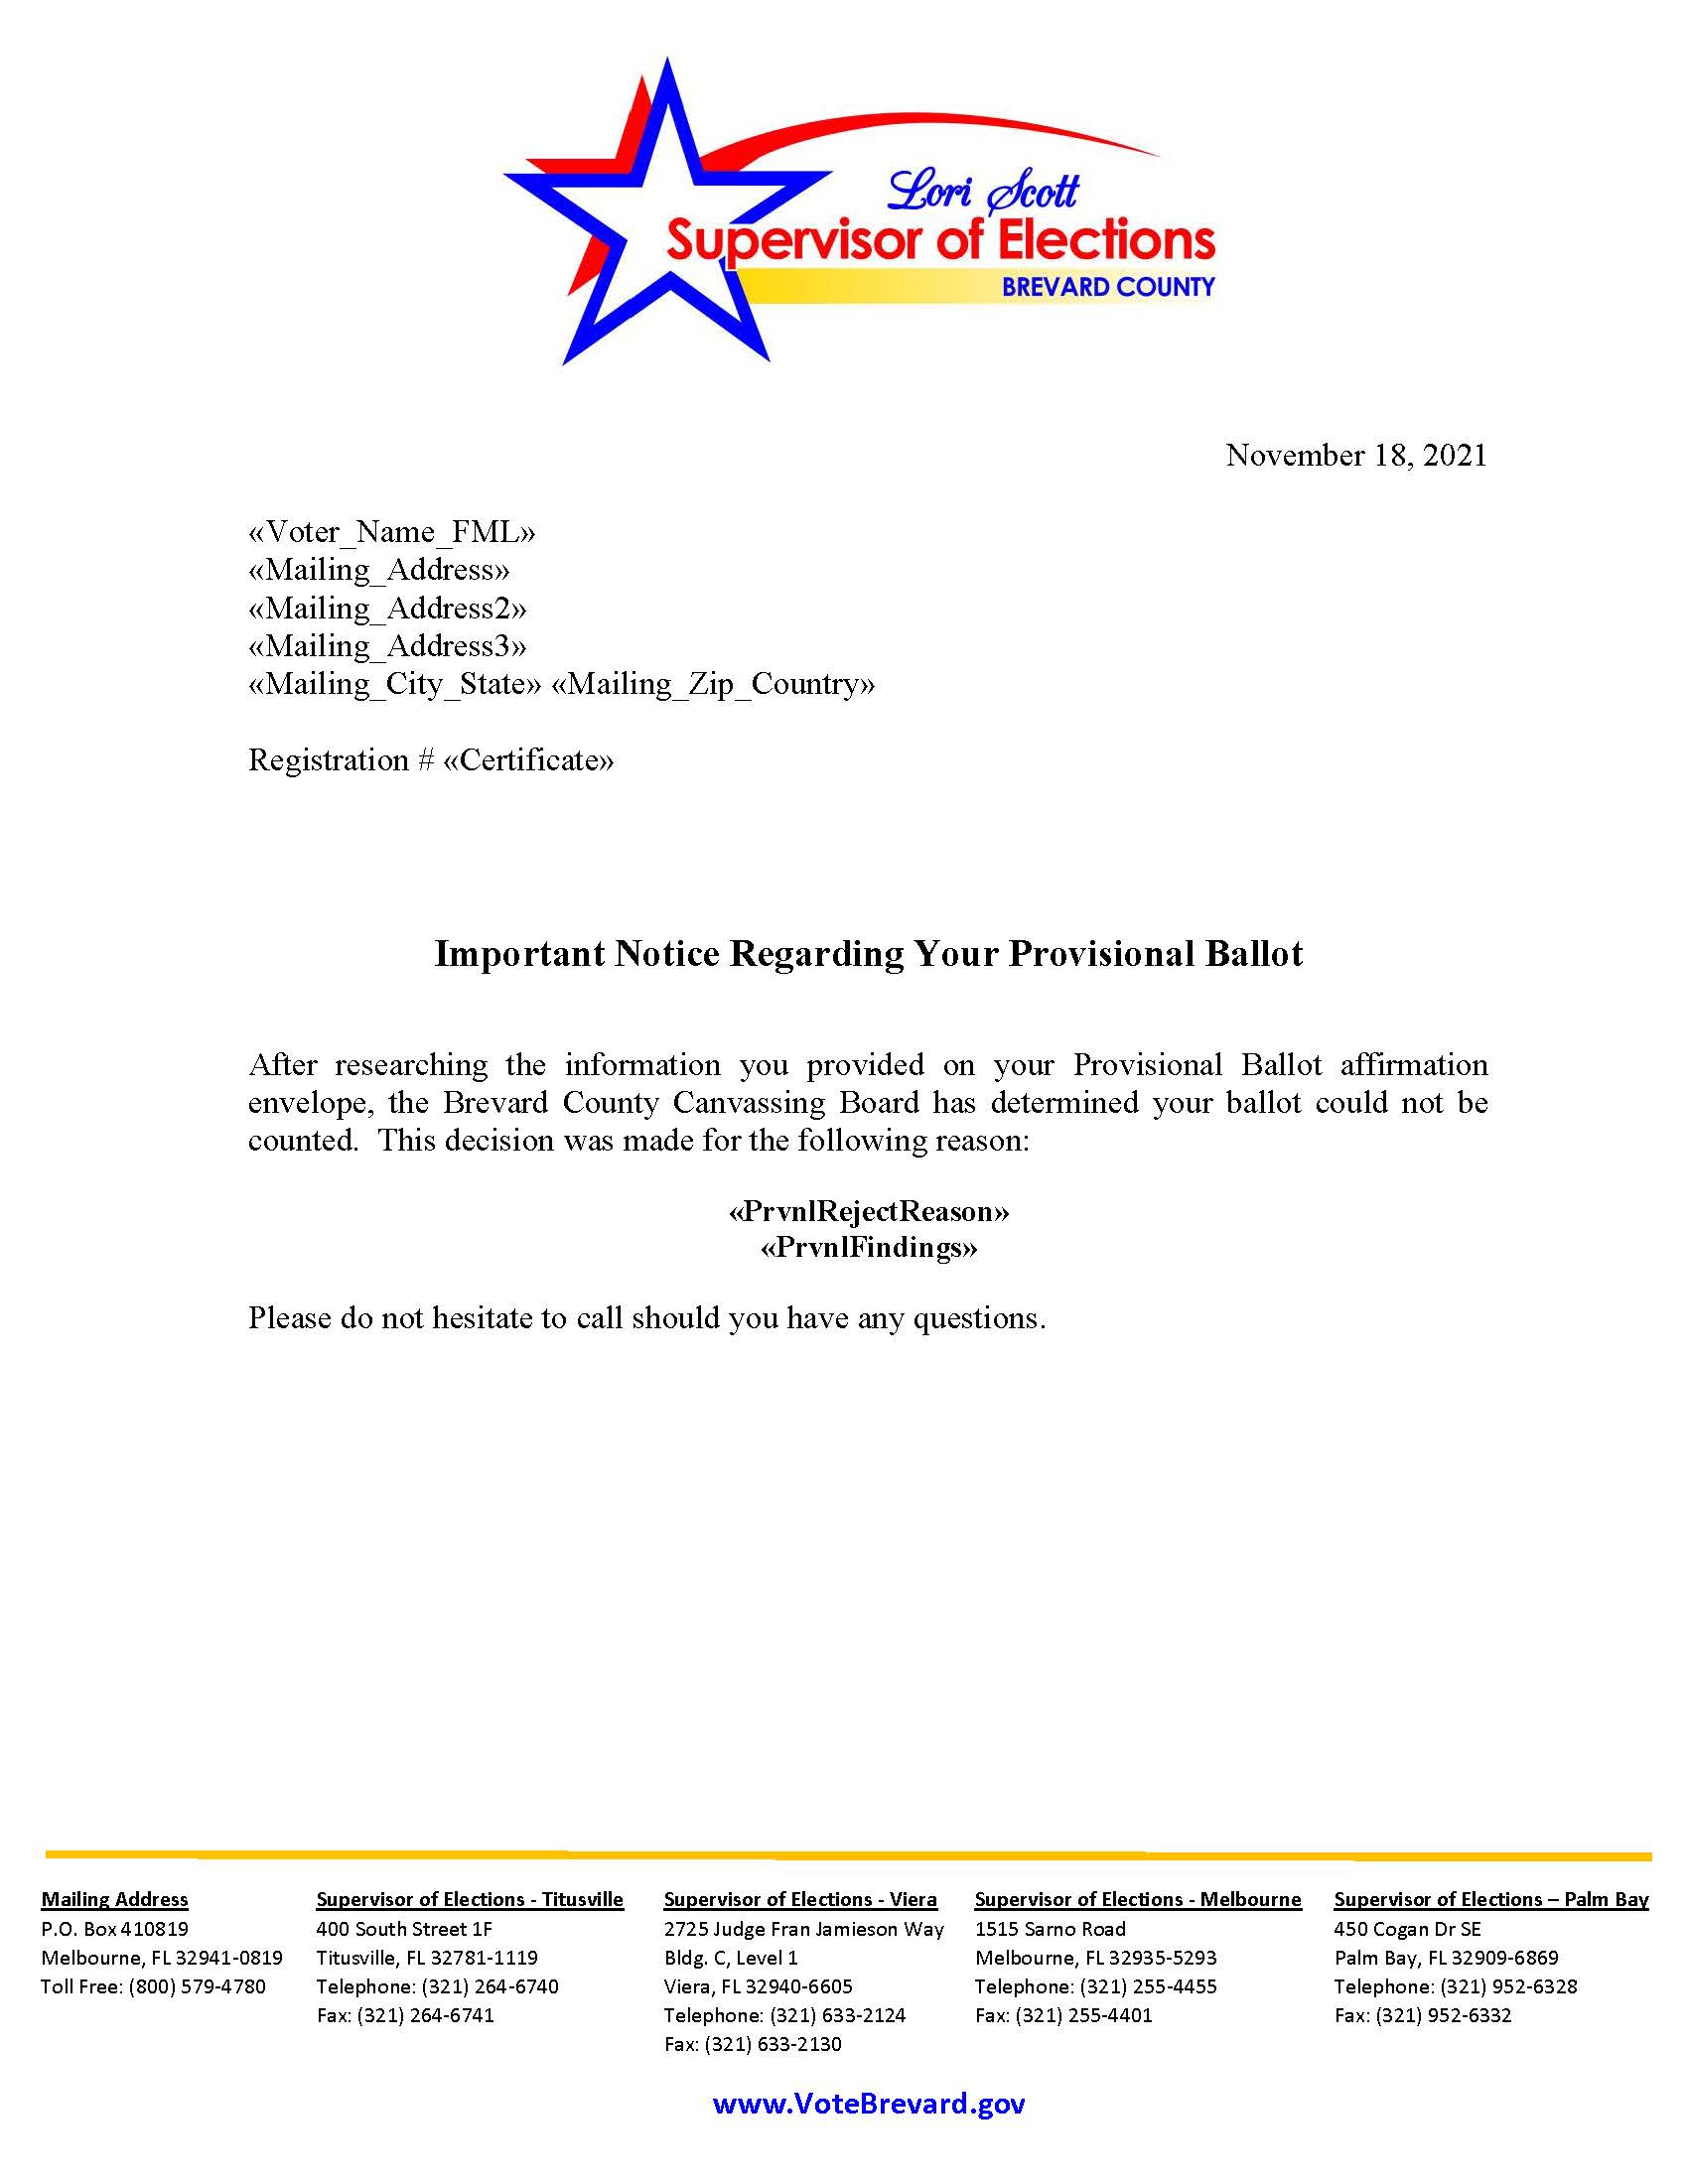 Sample Provisional Ballot Rejection letter